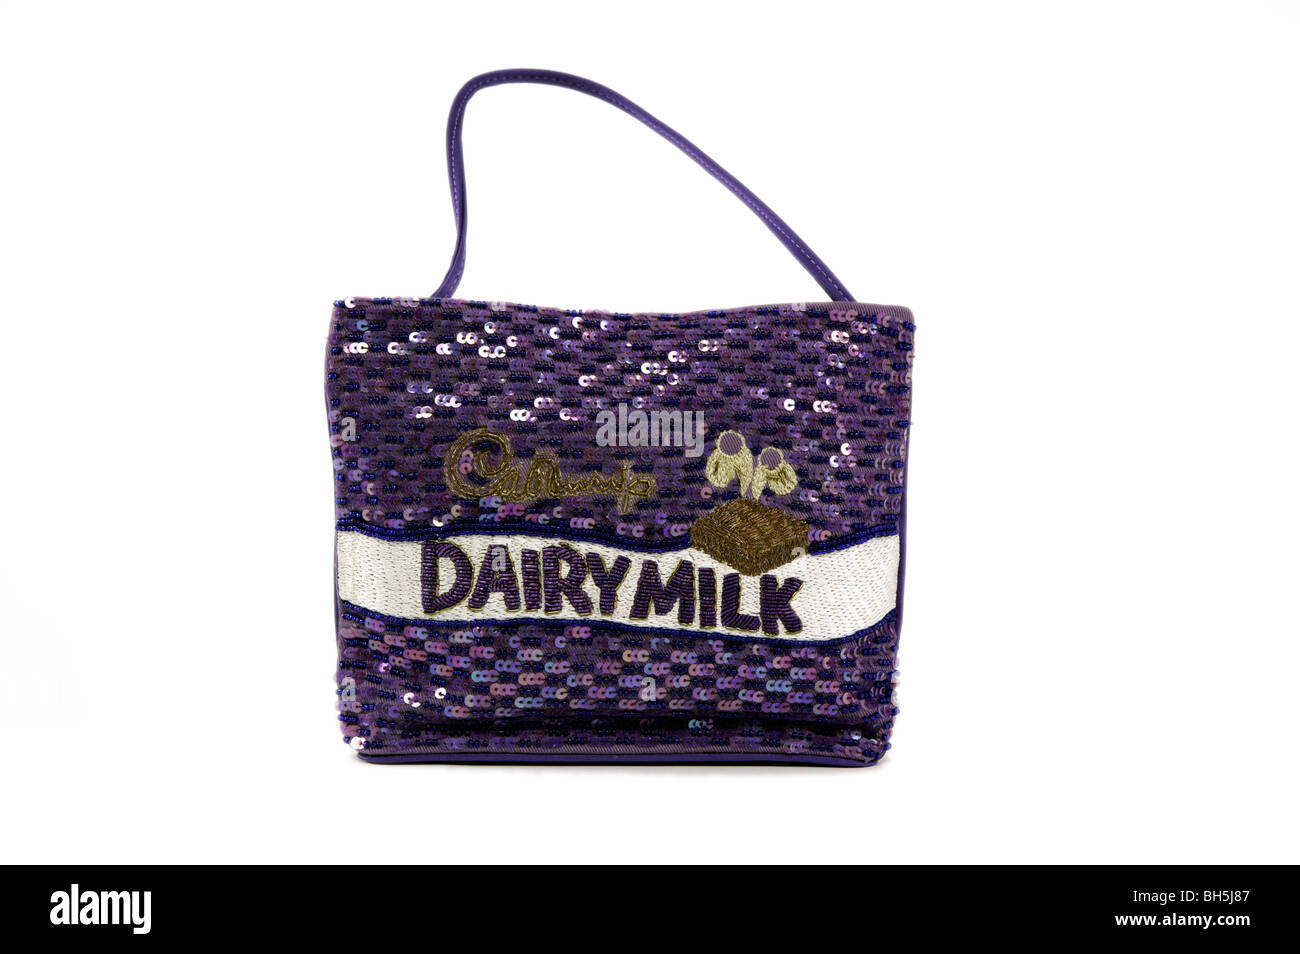 Anya Hindmarch sac à main avec un cadburys dairy milk design Banque D'Images